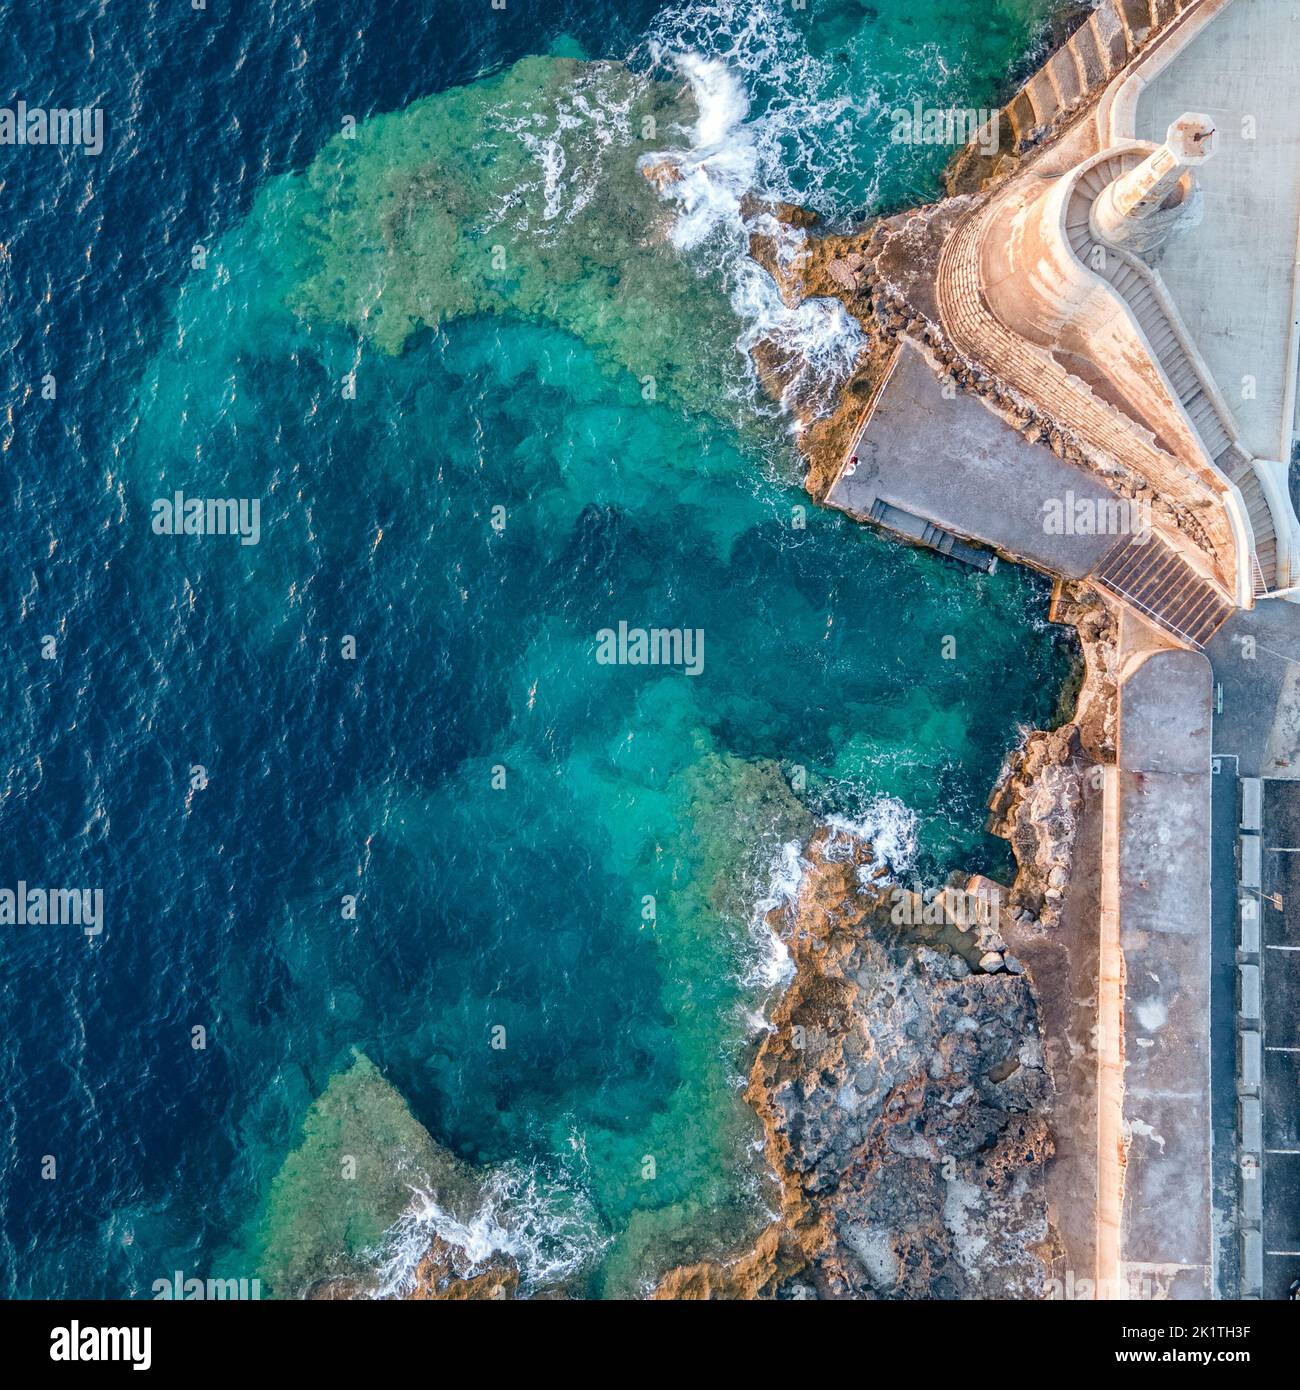 Cirkewwa dive site, rocky coastline and hues of blue on a sunset, Malta Stock Photo